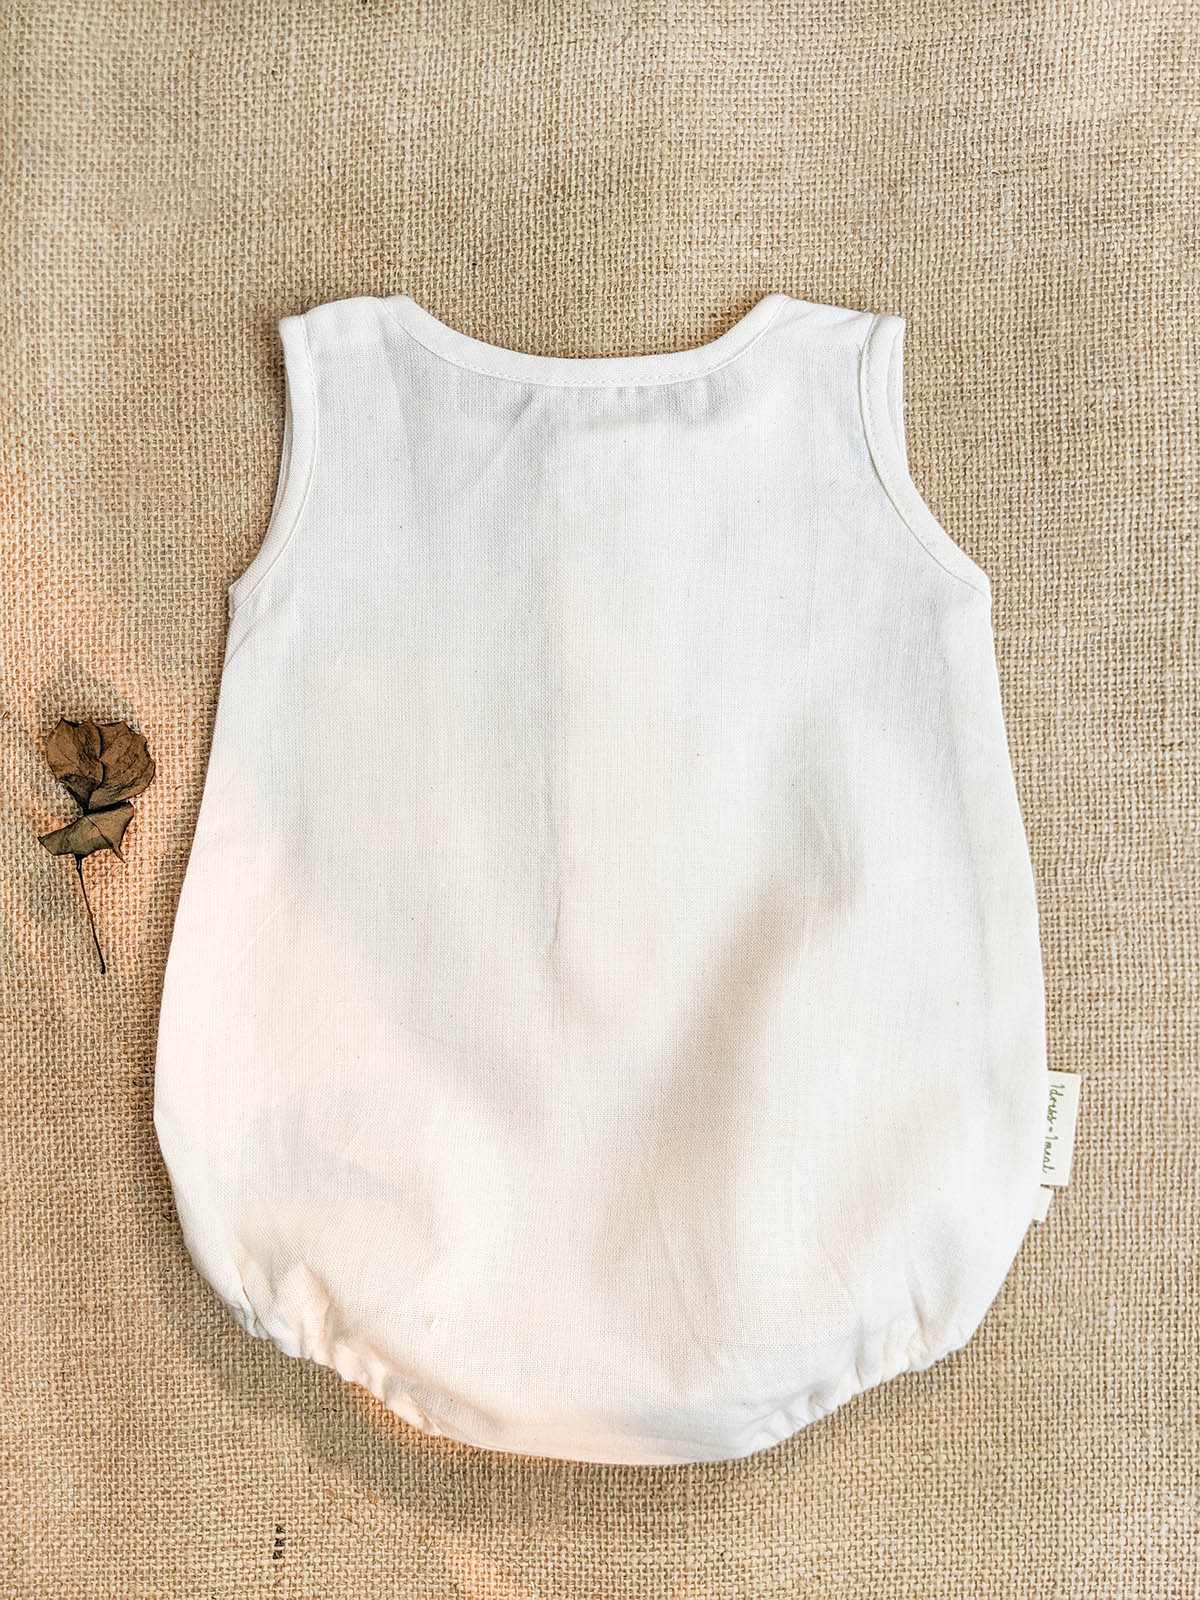 Girl's Pearl White Soft Pure Cotton Baby Unisex Bubble Romper  - HALEMONS